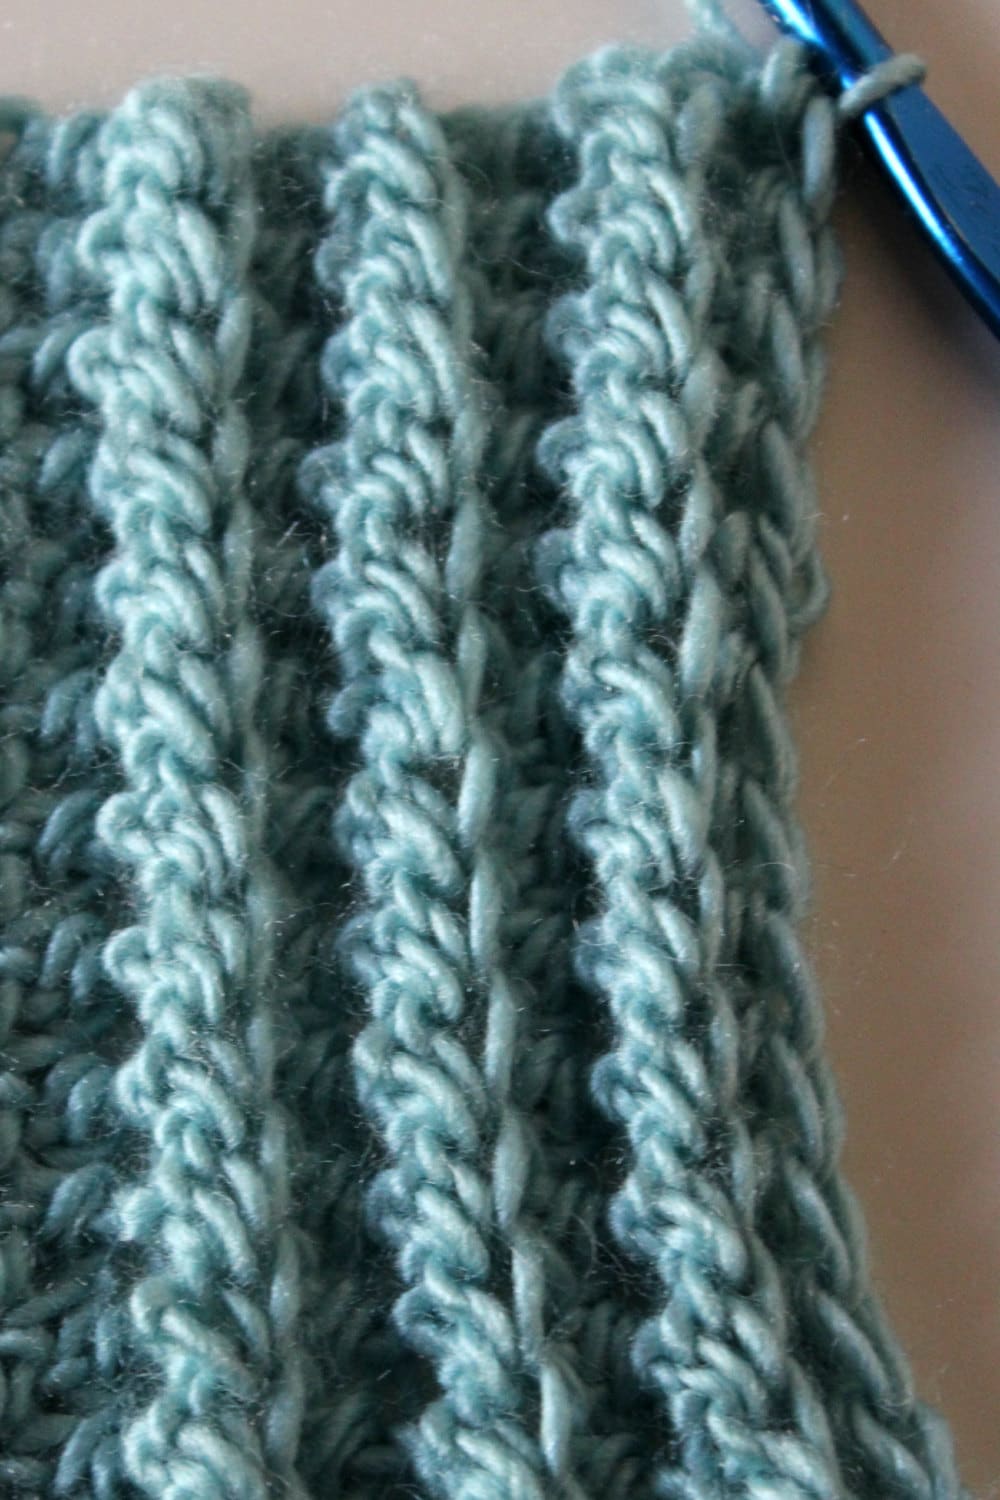 CROCHET PATTERN Half Triple Crochet Blanket or Scarf Make to Any Size PDF  Download - Etsy Norway